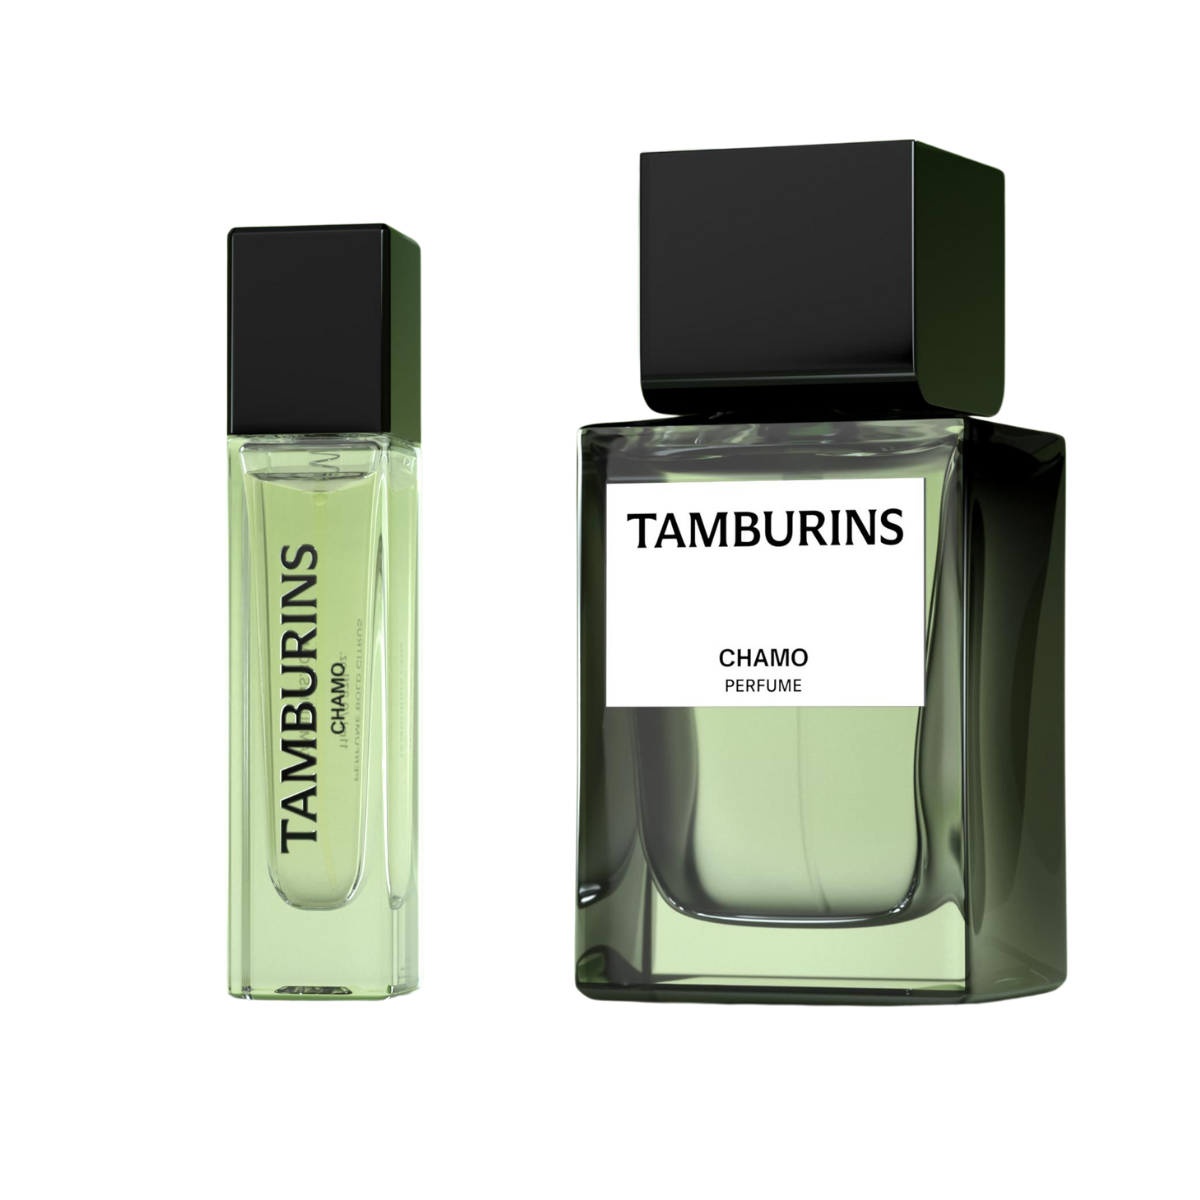 TAMBURINS Perfume bottle with #Chamo 11ml / 50ml label.